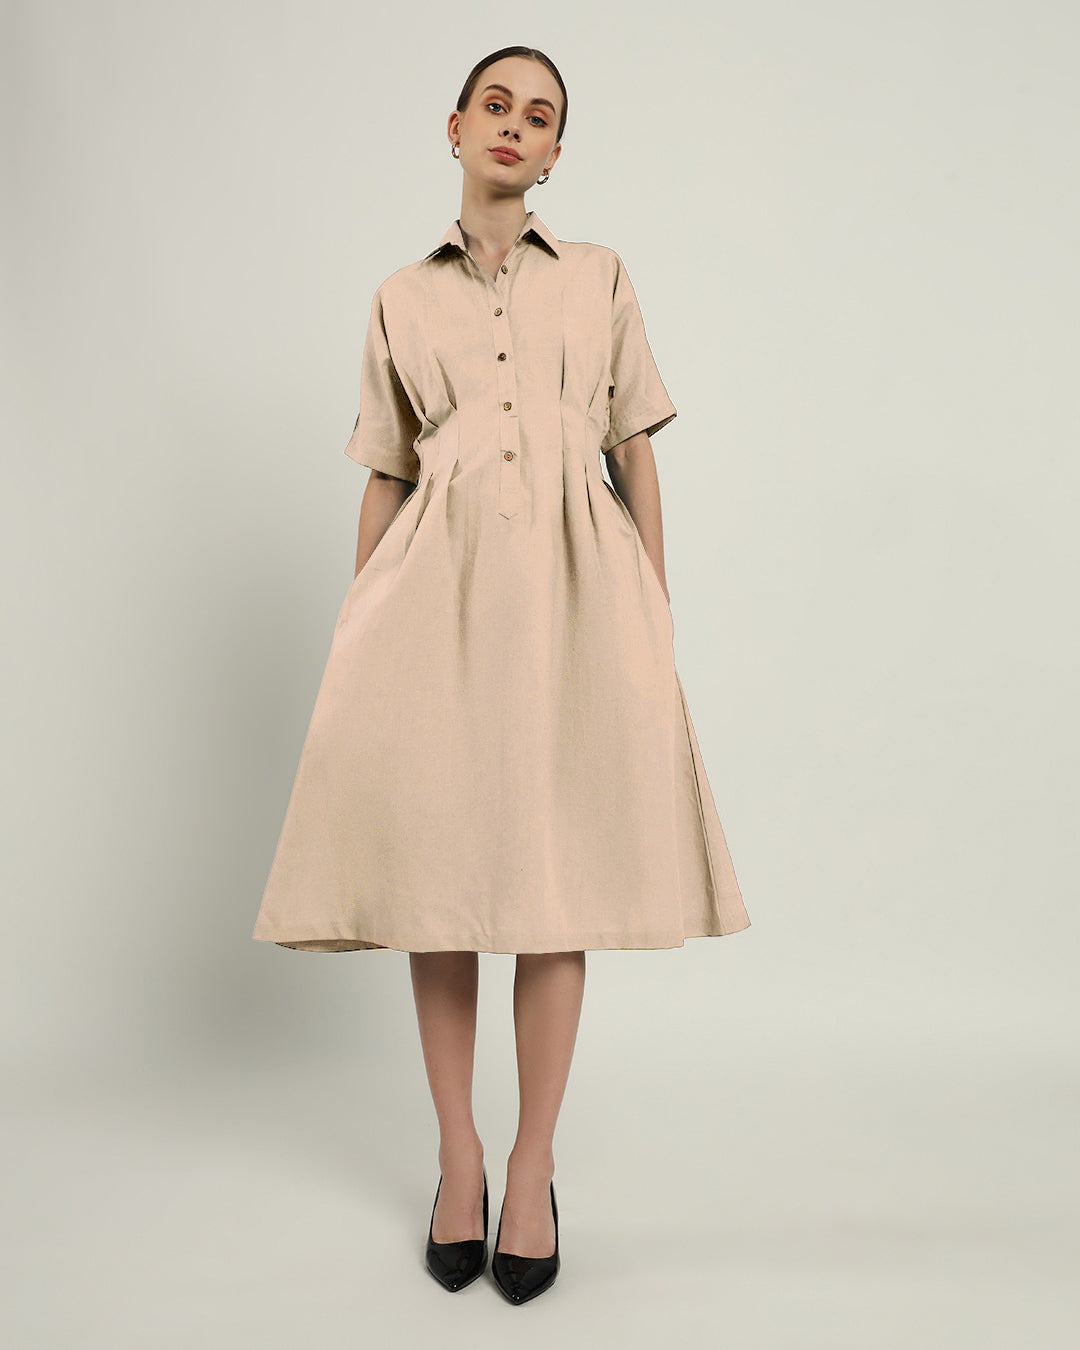 The Salford Daisy Bisque Linen Dress